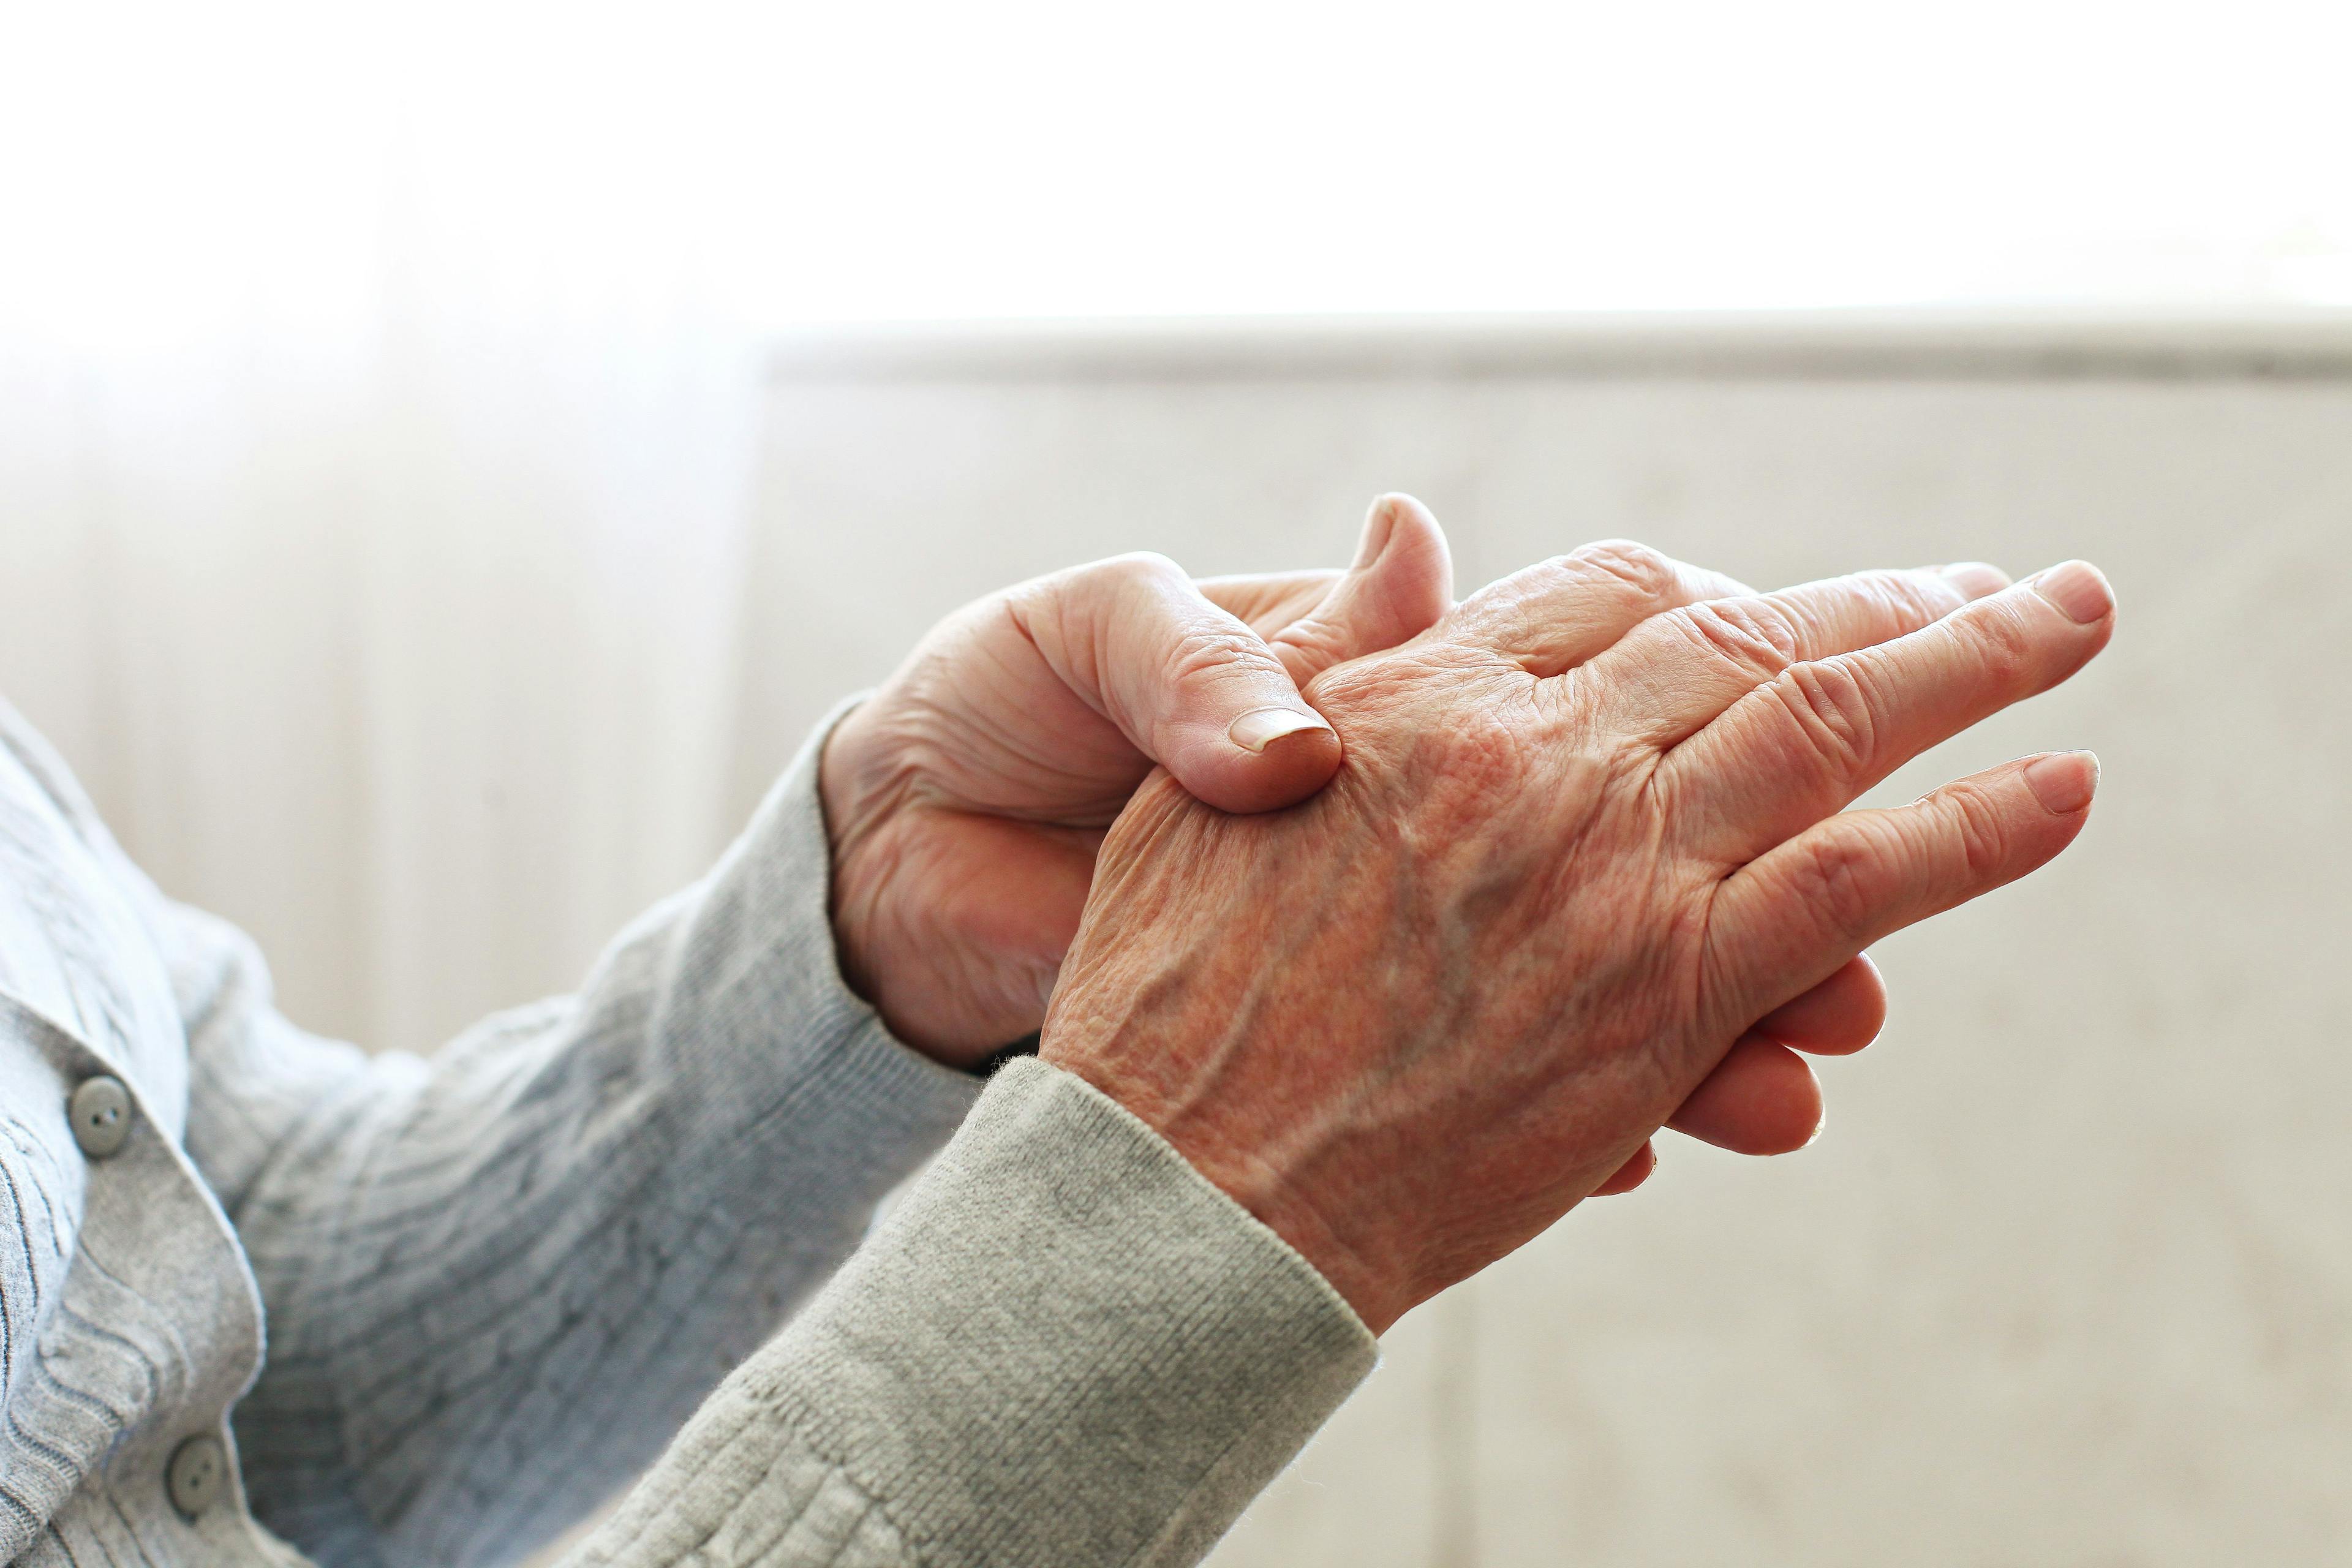 Senior old lady experiencing severe arthritis rheumatics pains, massaging, warming up arm. | Image Credit: Evrymmnt - stock.adobe.com